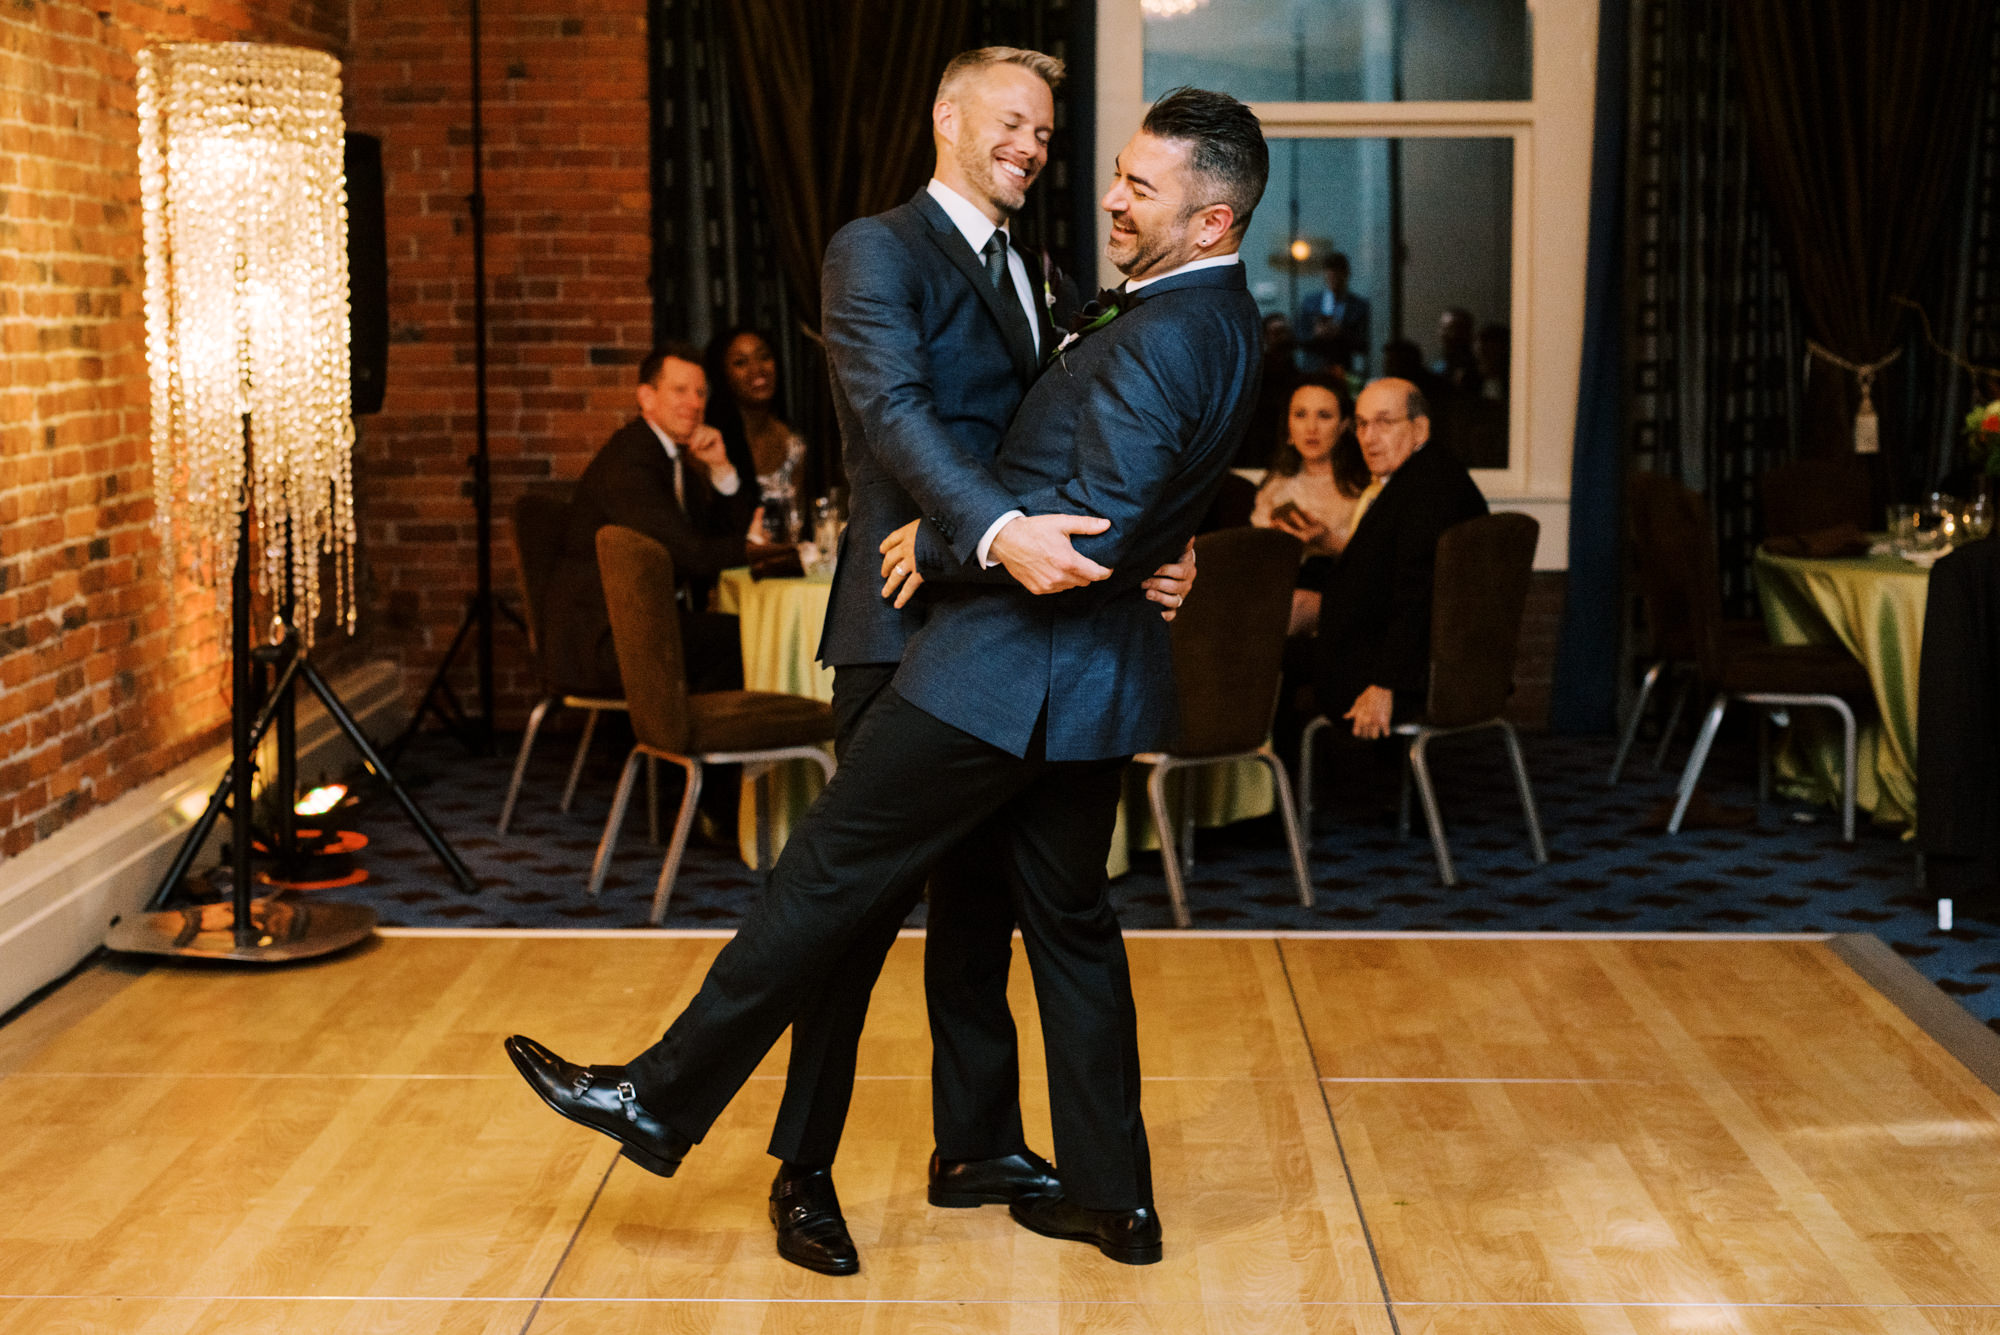 Alexis Royal Sonesta Hotel Hotel wedding: Michael and Justin post wedding reception toast moments